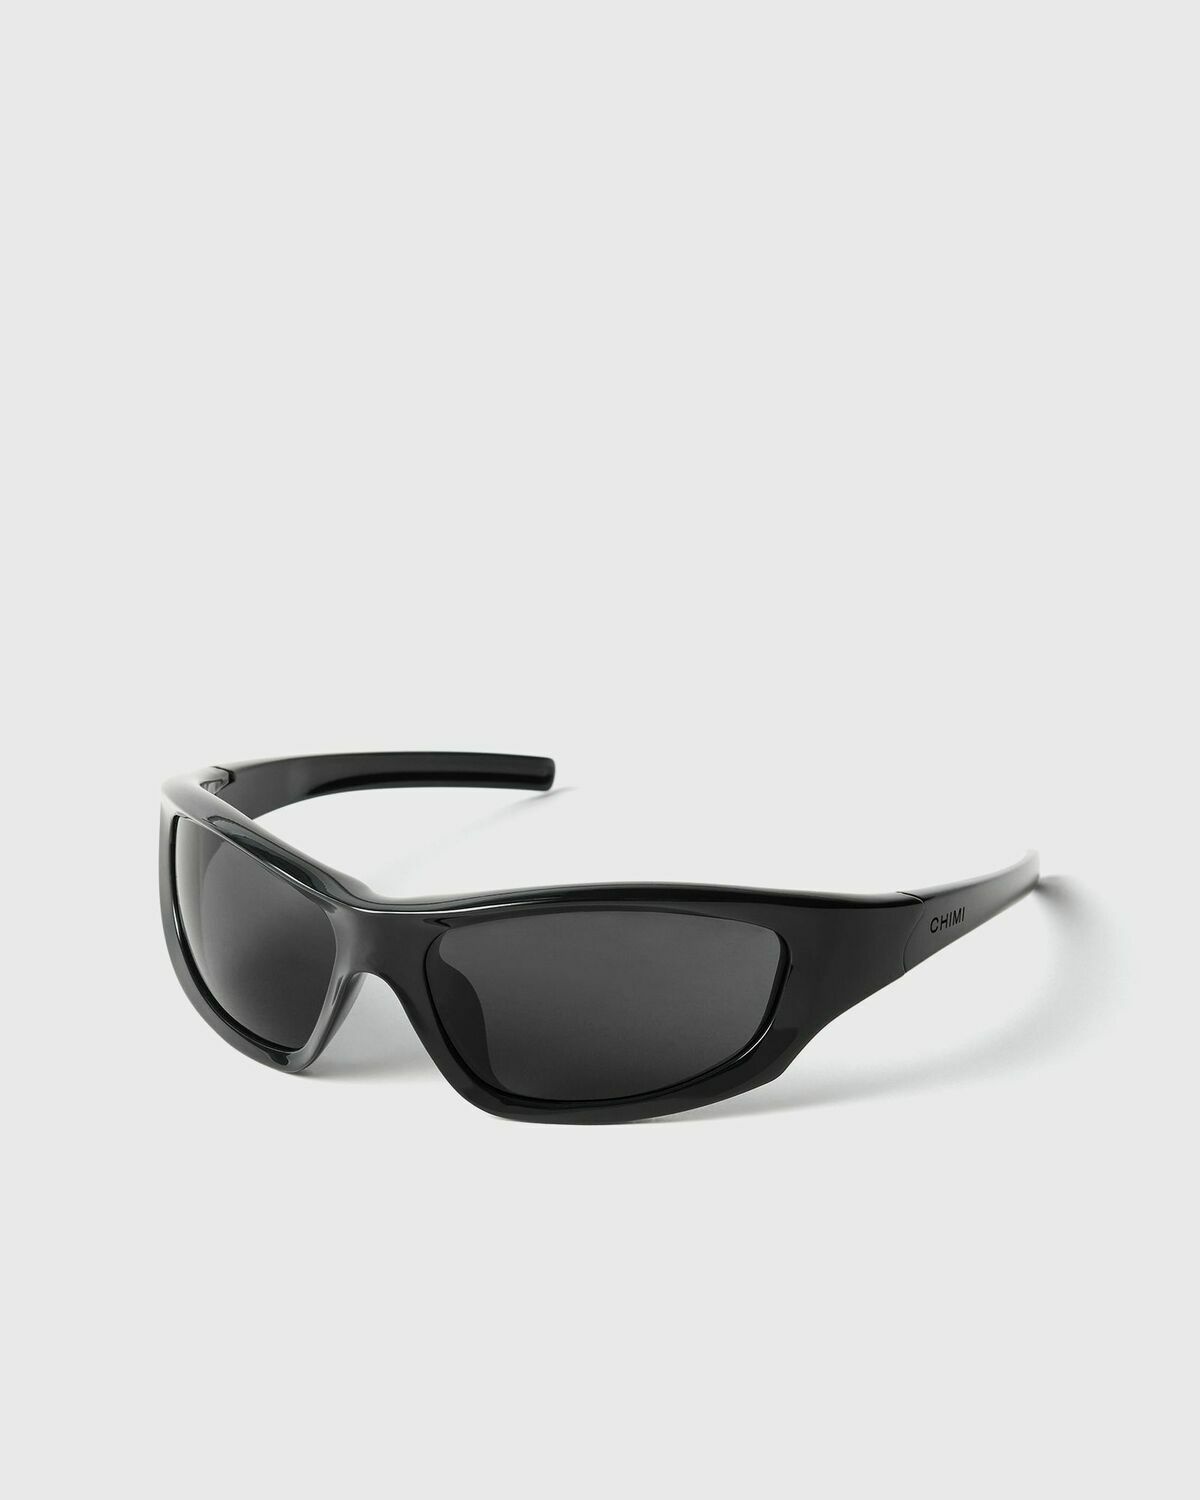 Chimi Eyewear Flash Black Sunglasses Black - Mens - Eyewear